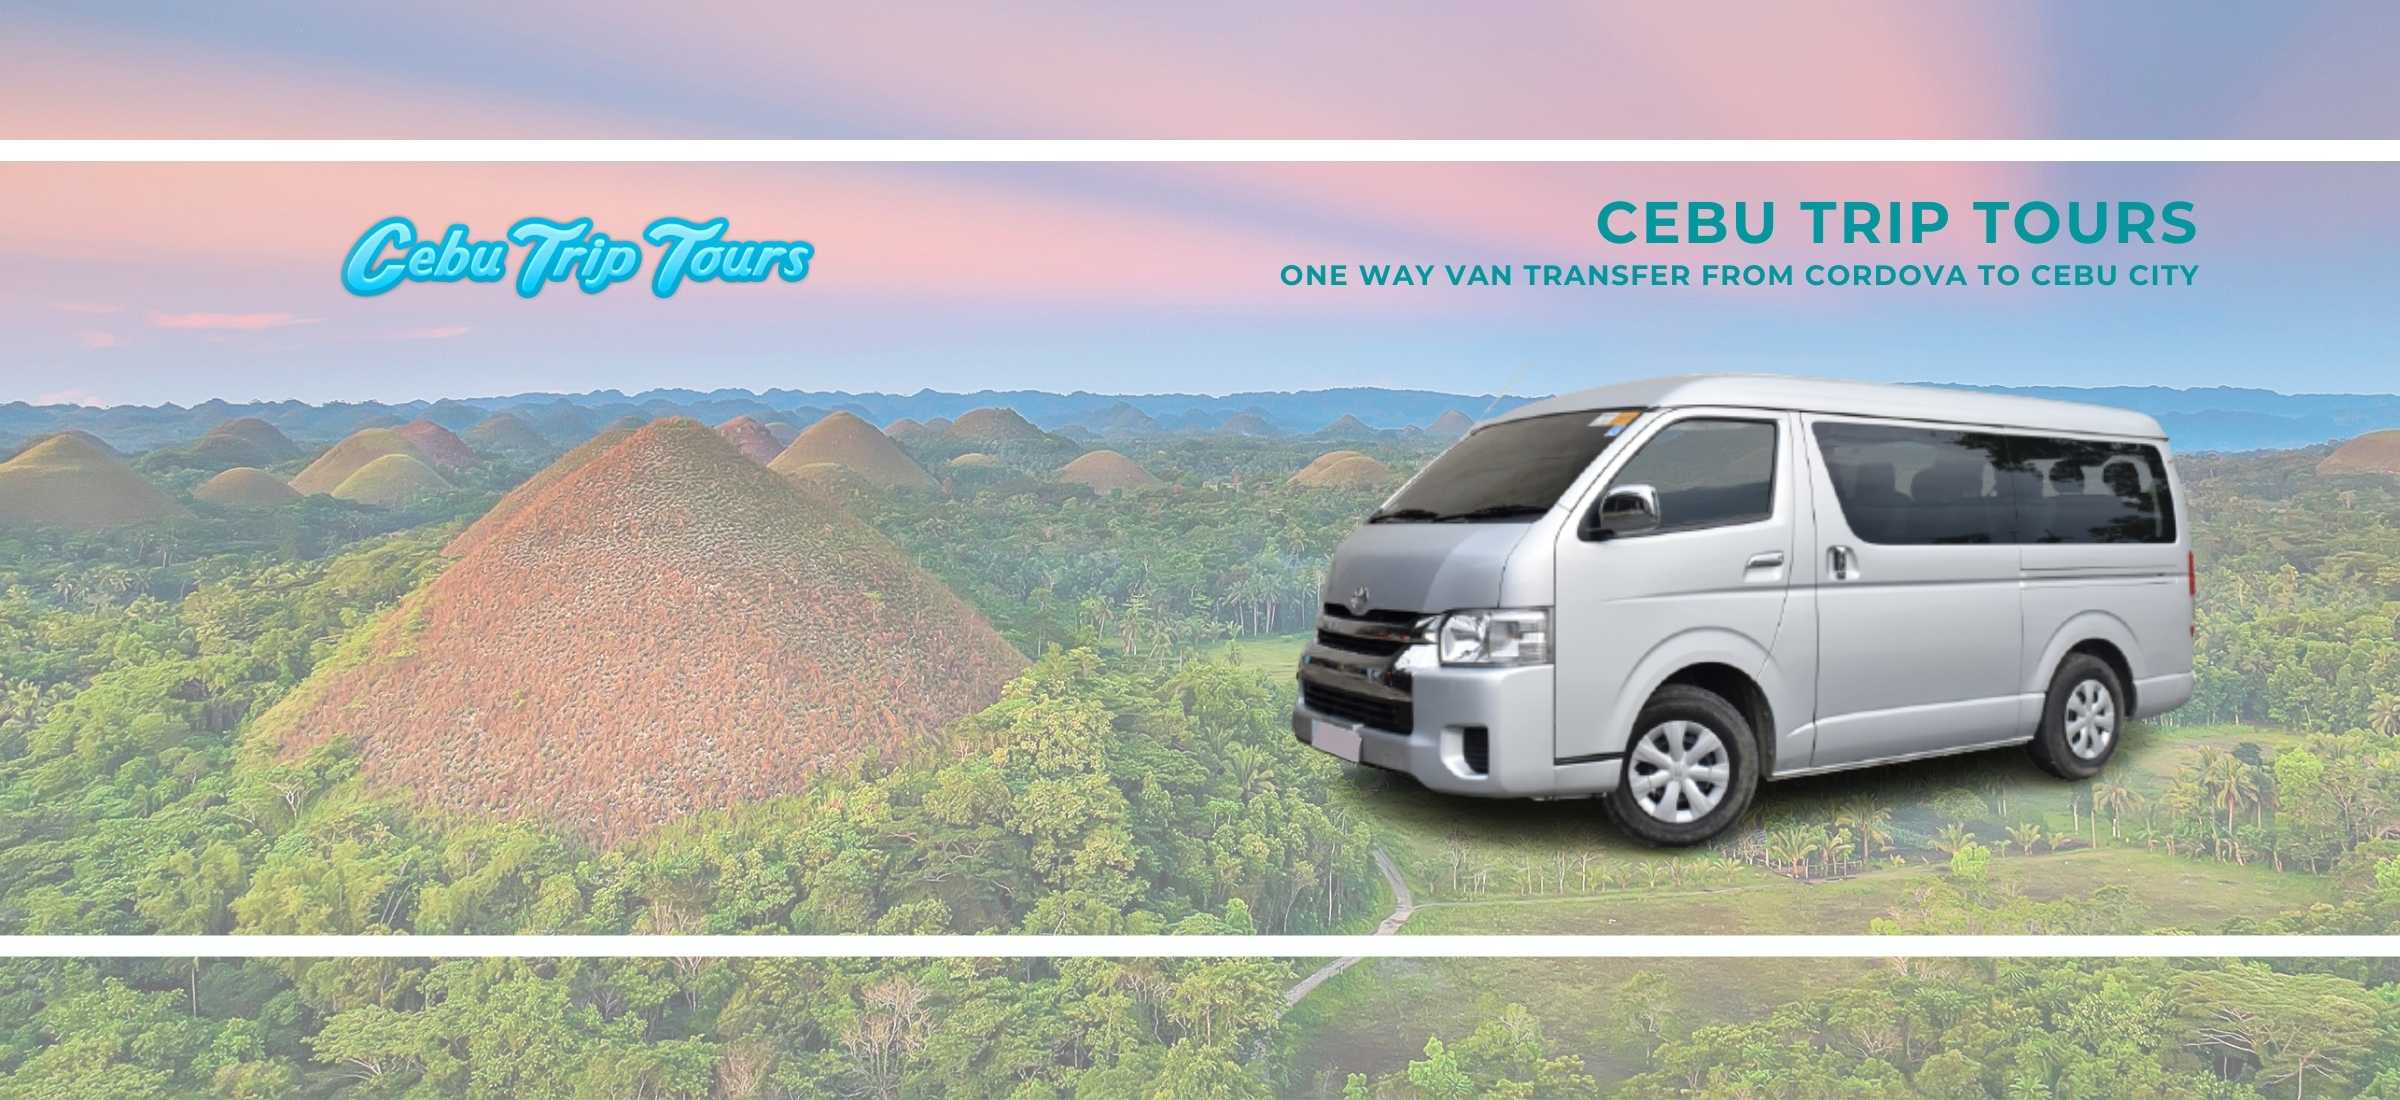 One Way Transfer from Cordova to Cebu City